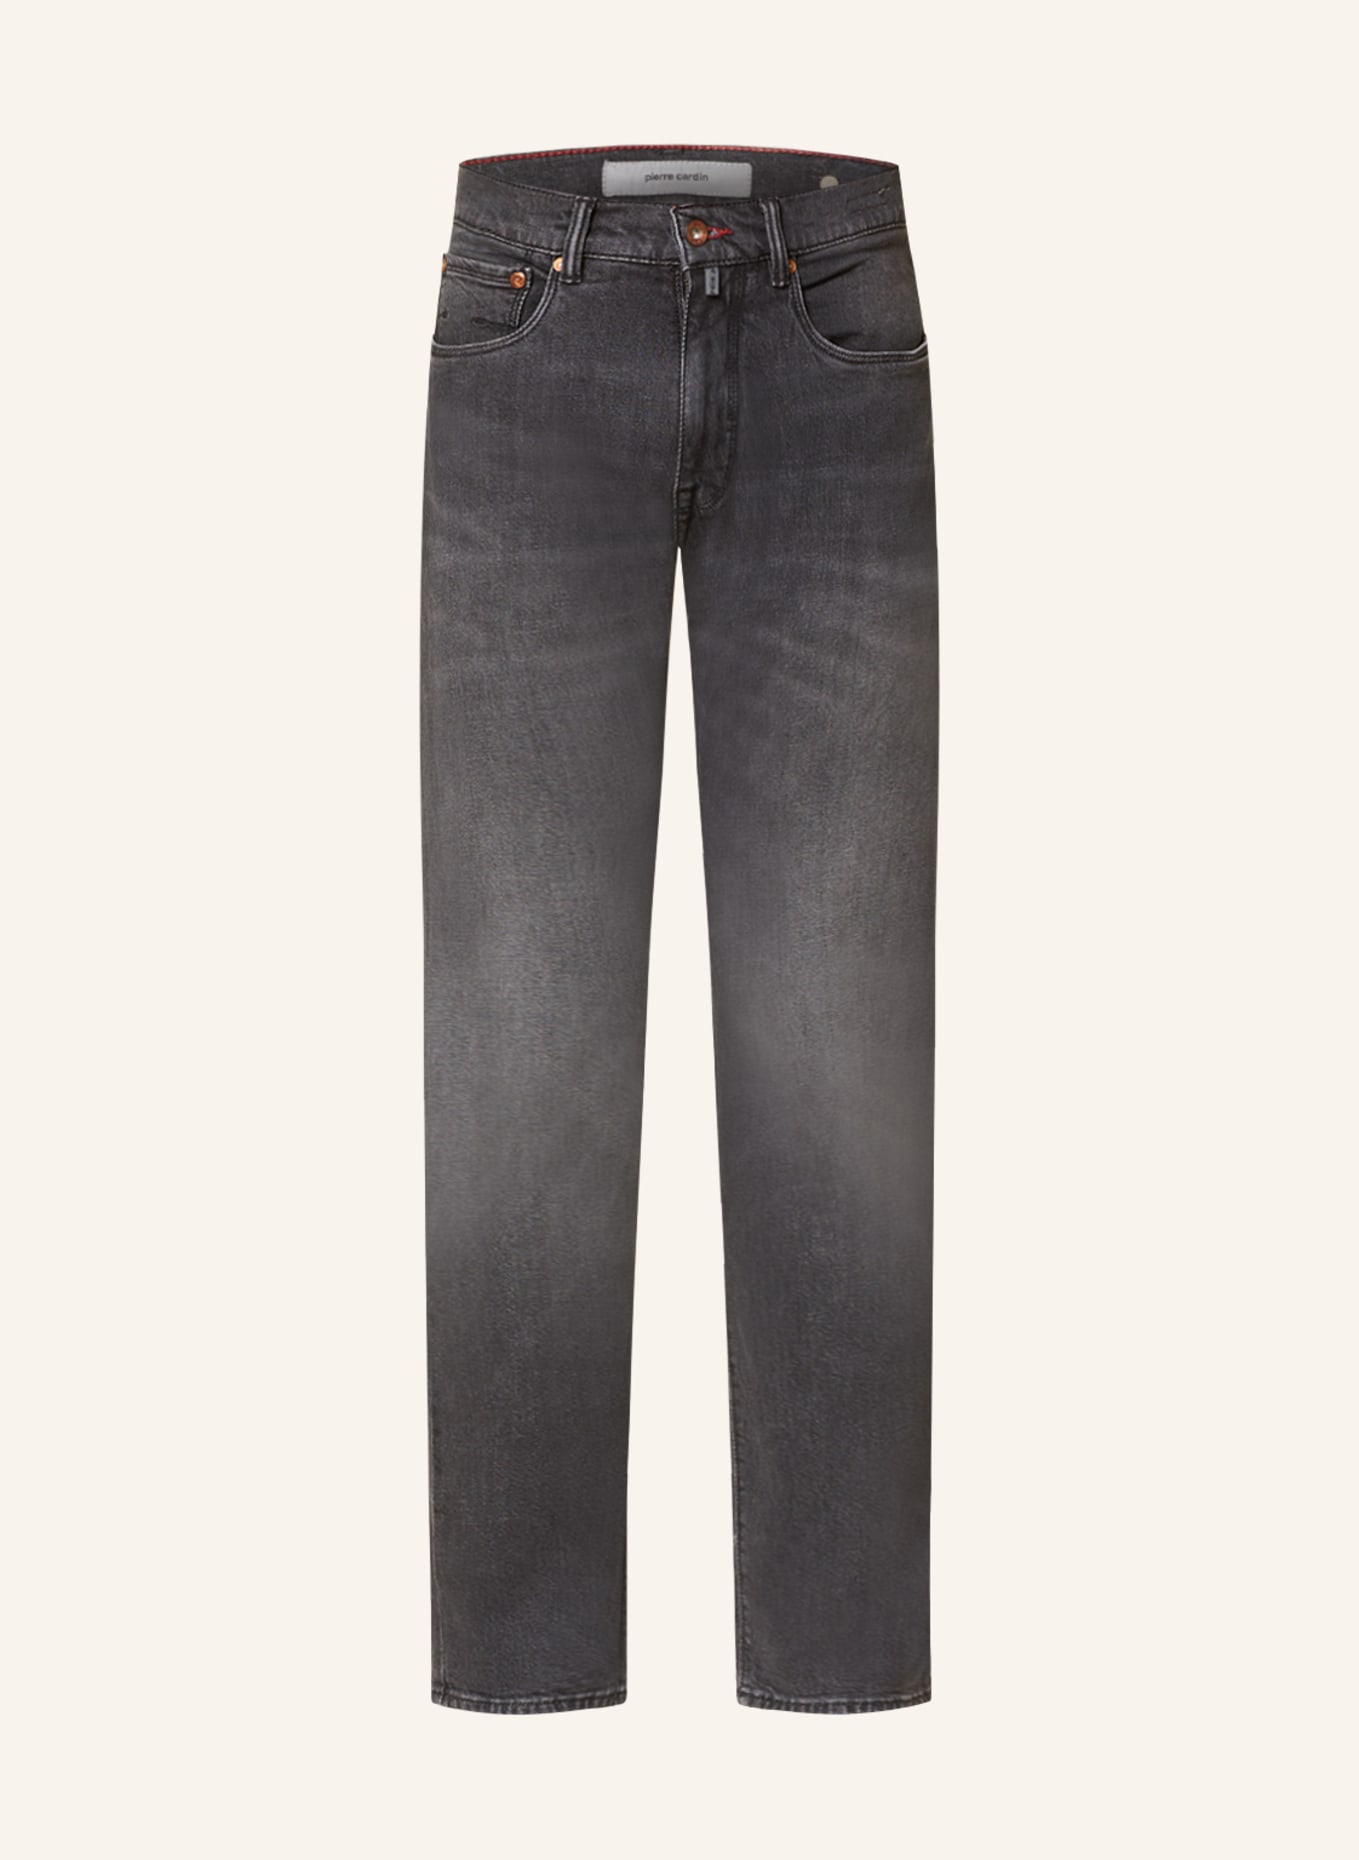 pierre cardin Jeans LYON Tapered Fit, Farbe: 9817 black fashion (Bild 1)